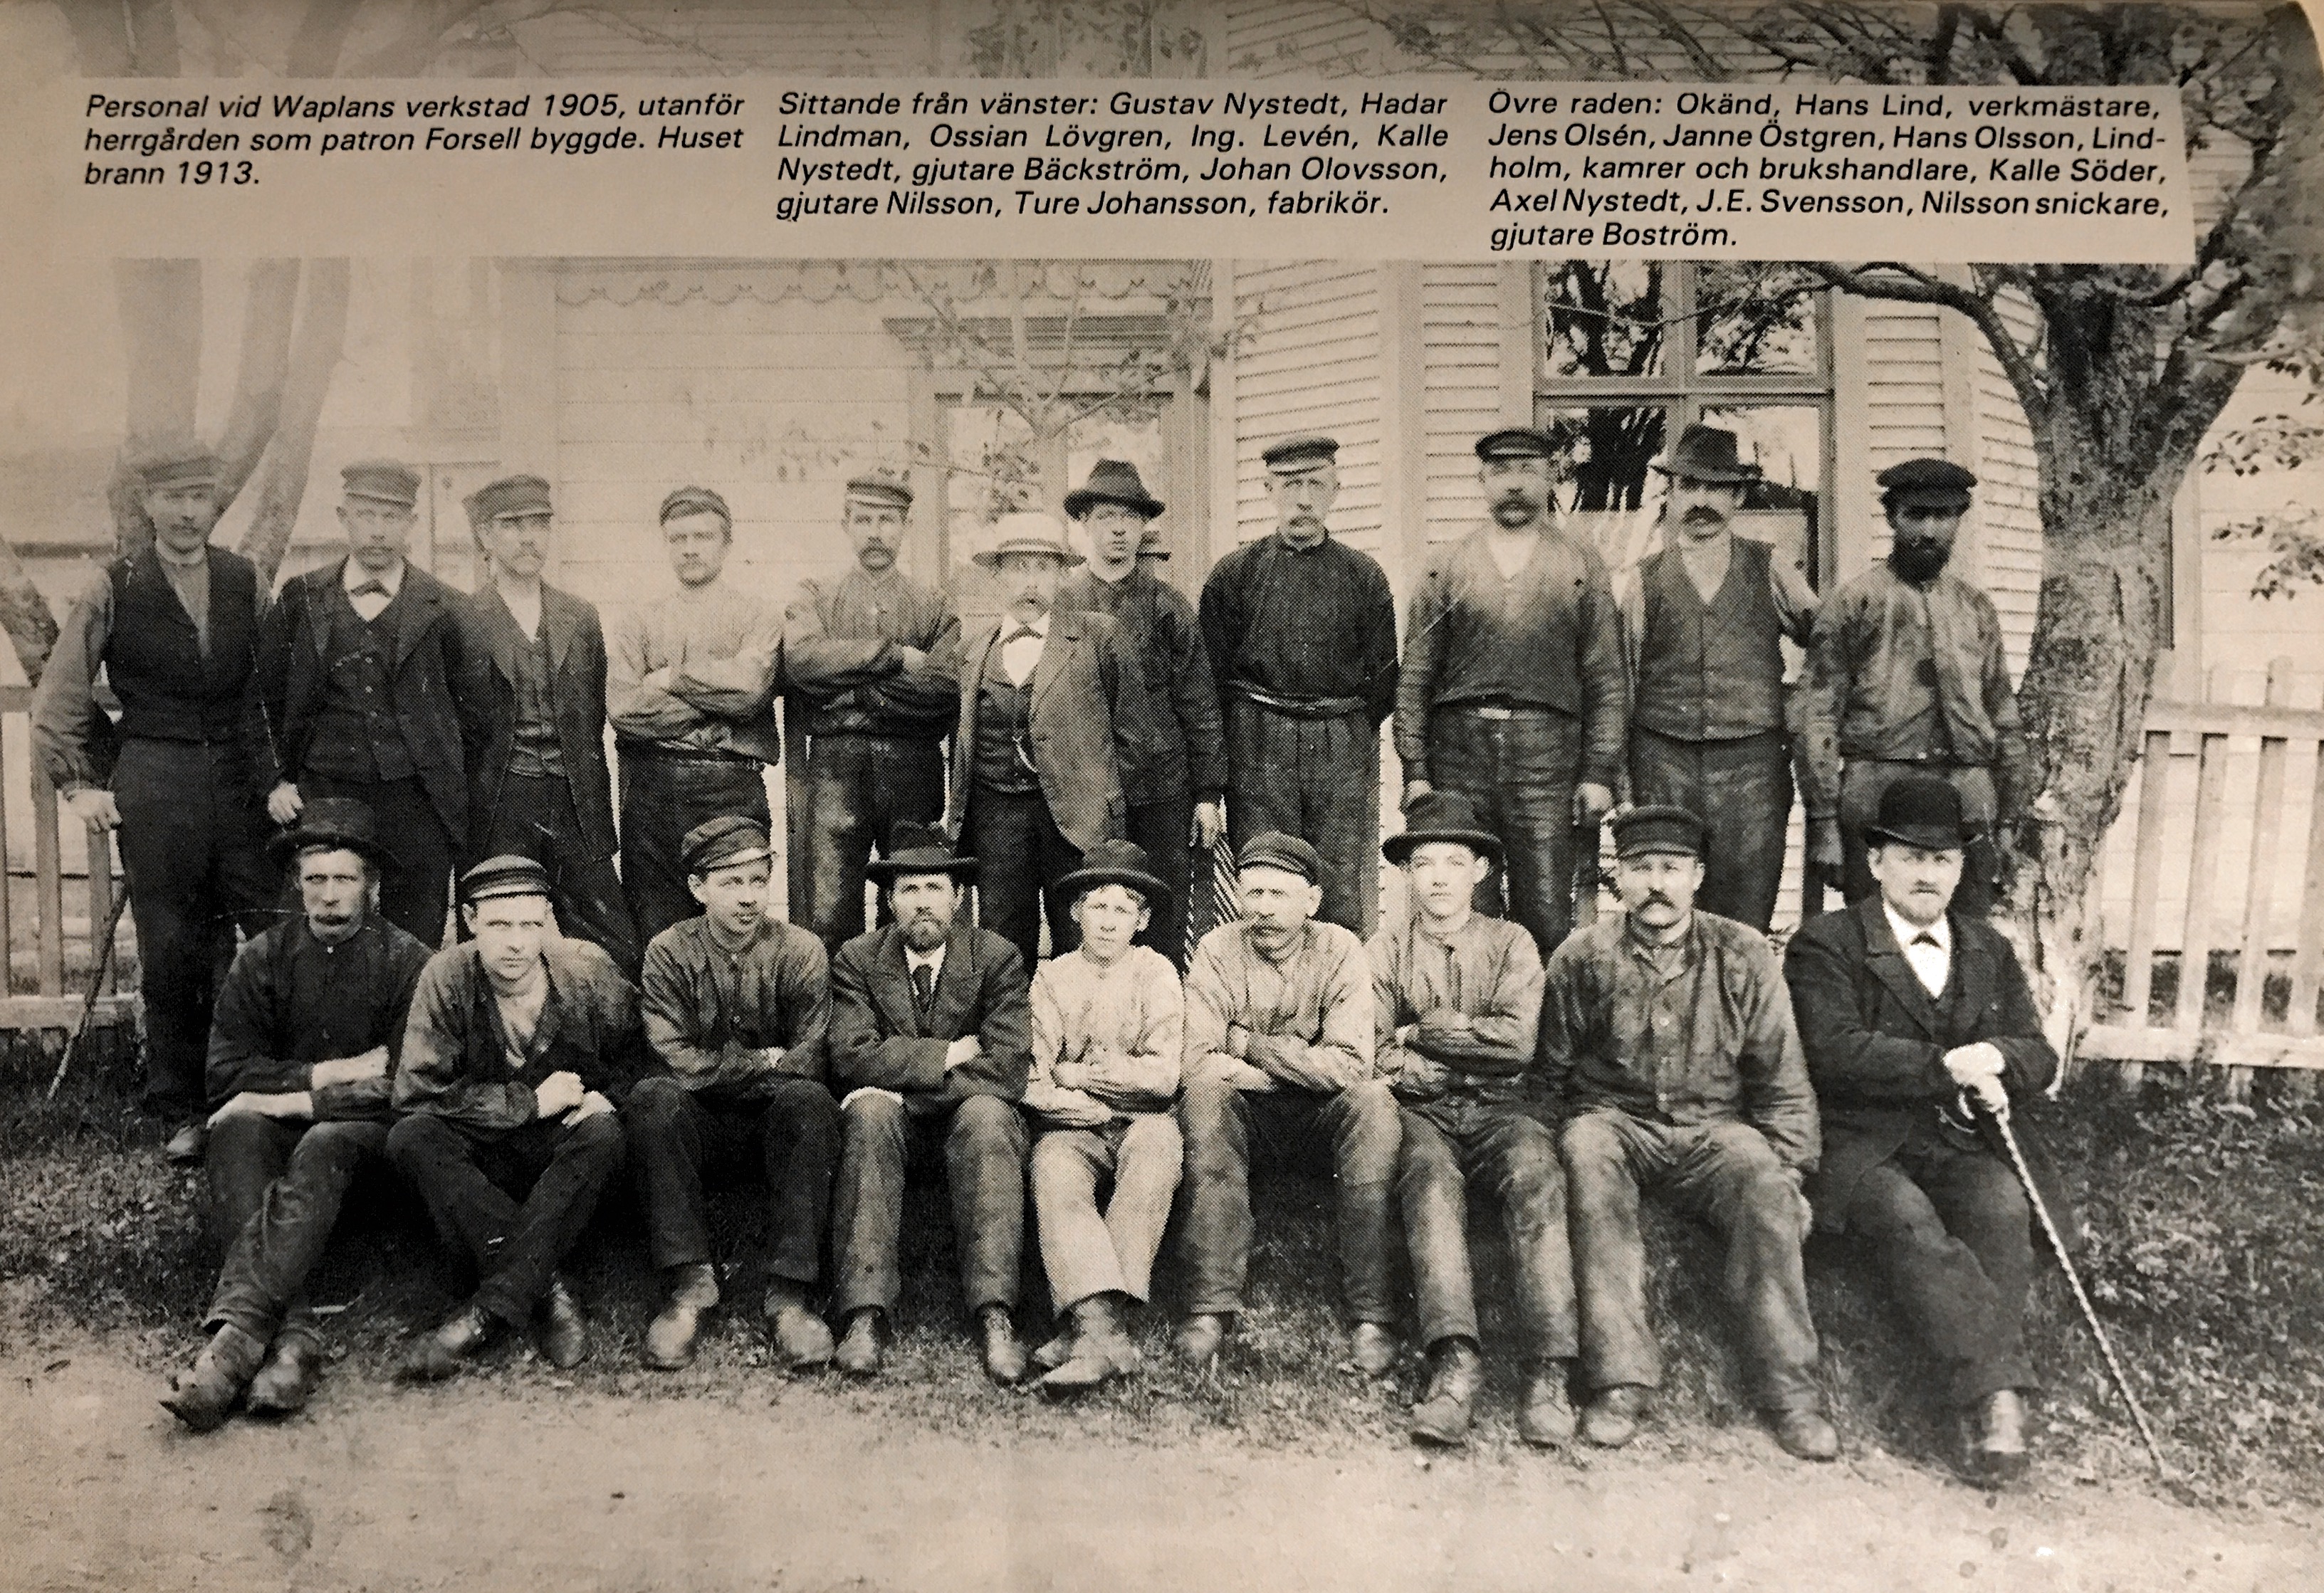 vaplan verkstadsarbetare 1905